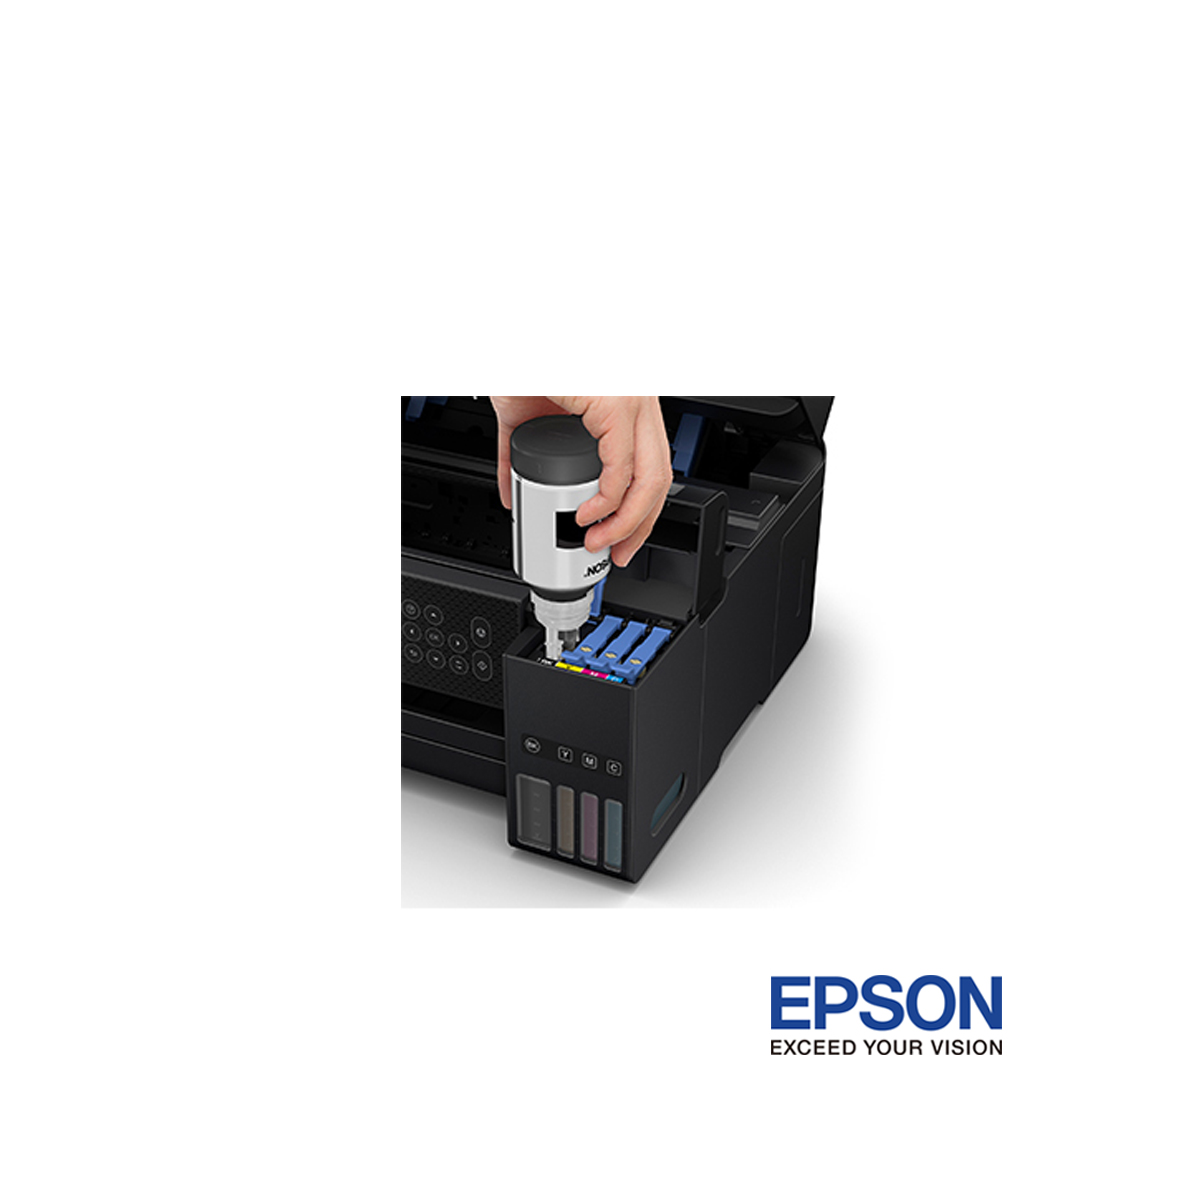 Jual Printer Epson L4260 Print Scan Copy Ink Tank Wireless Borderless di Denpasar Bali